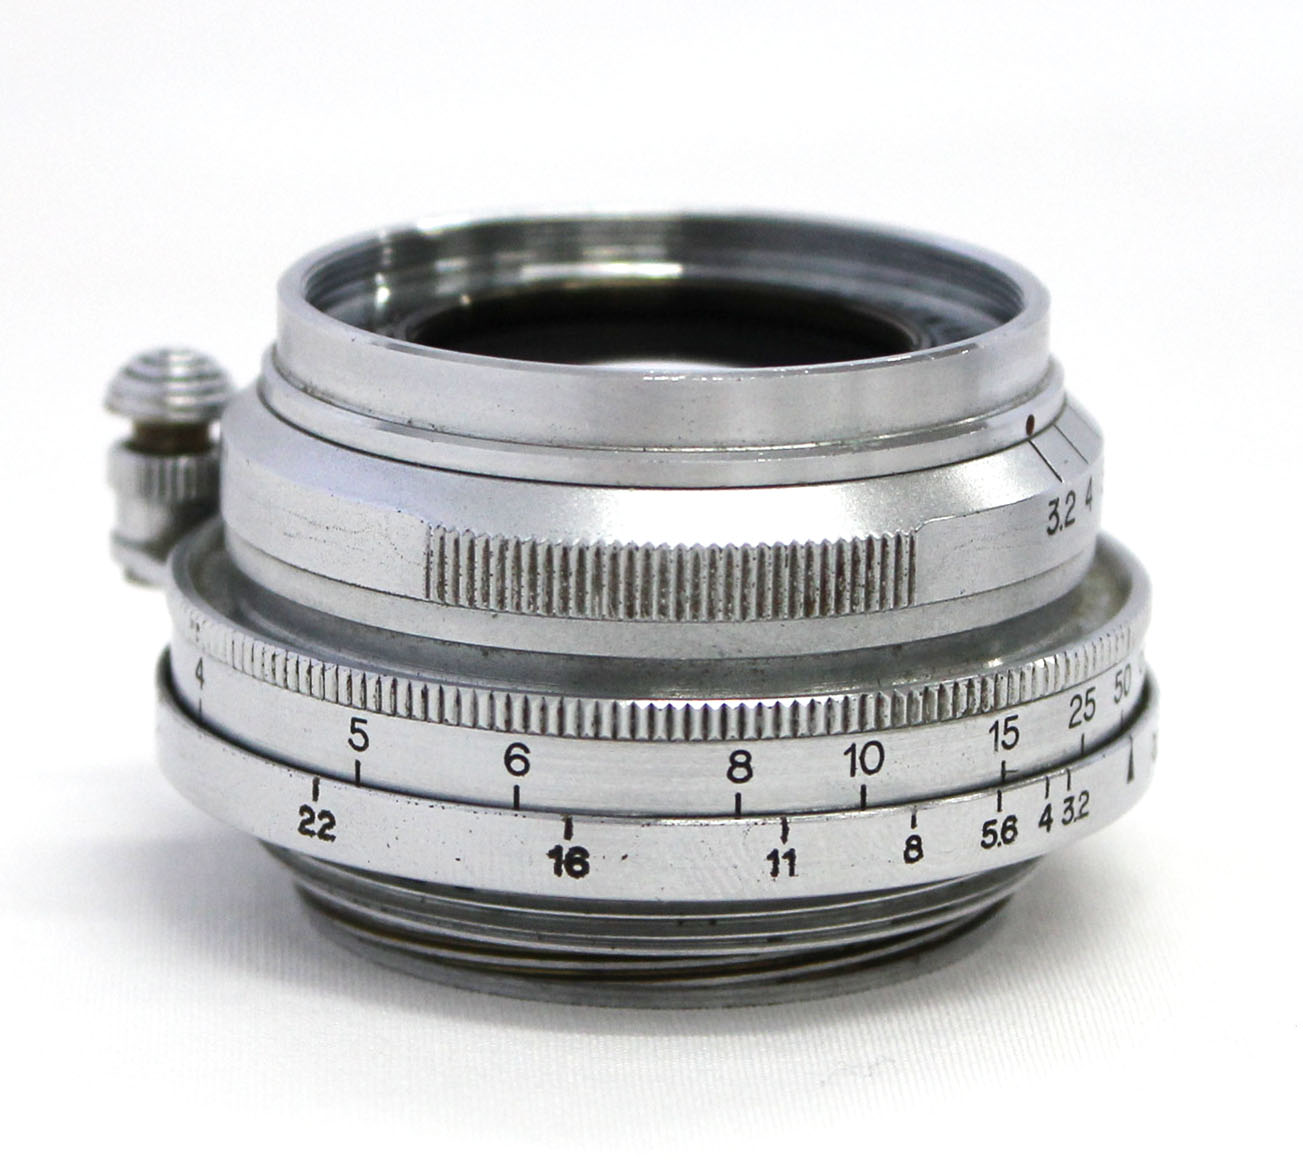 Canon Serenar 35mm F/3.2 L39 LTM Leica Thread Mount Lens from Japan Photo 2